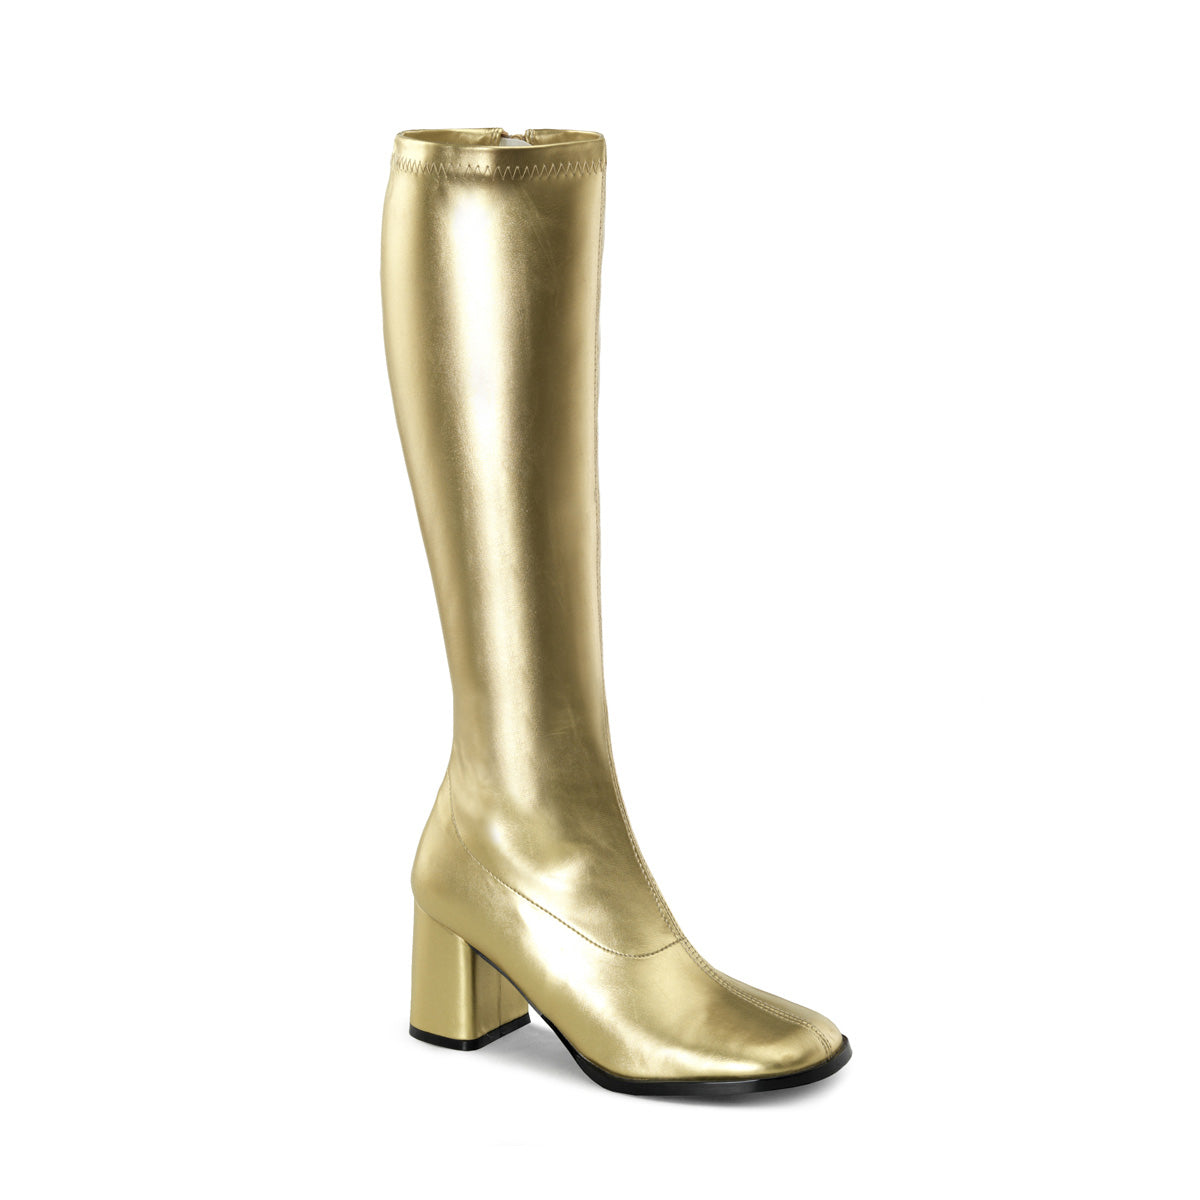 GOGO-300 Pleasers Funtasma 3 Inch Heel Gold Women's Boots